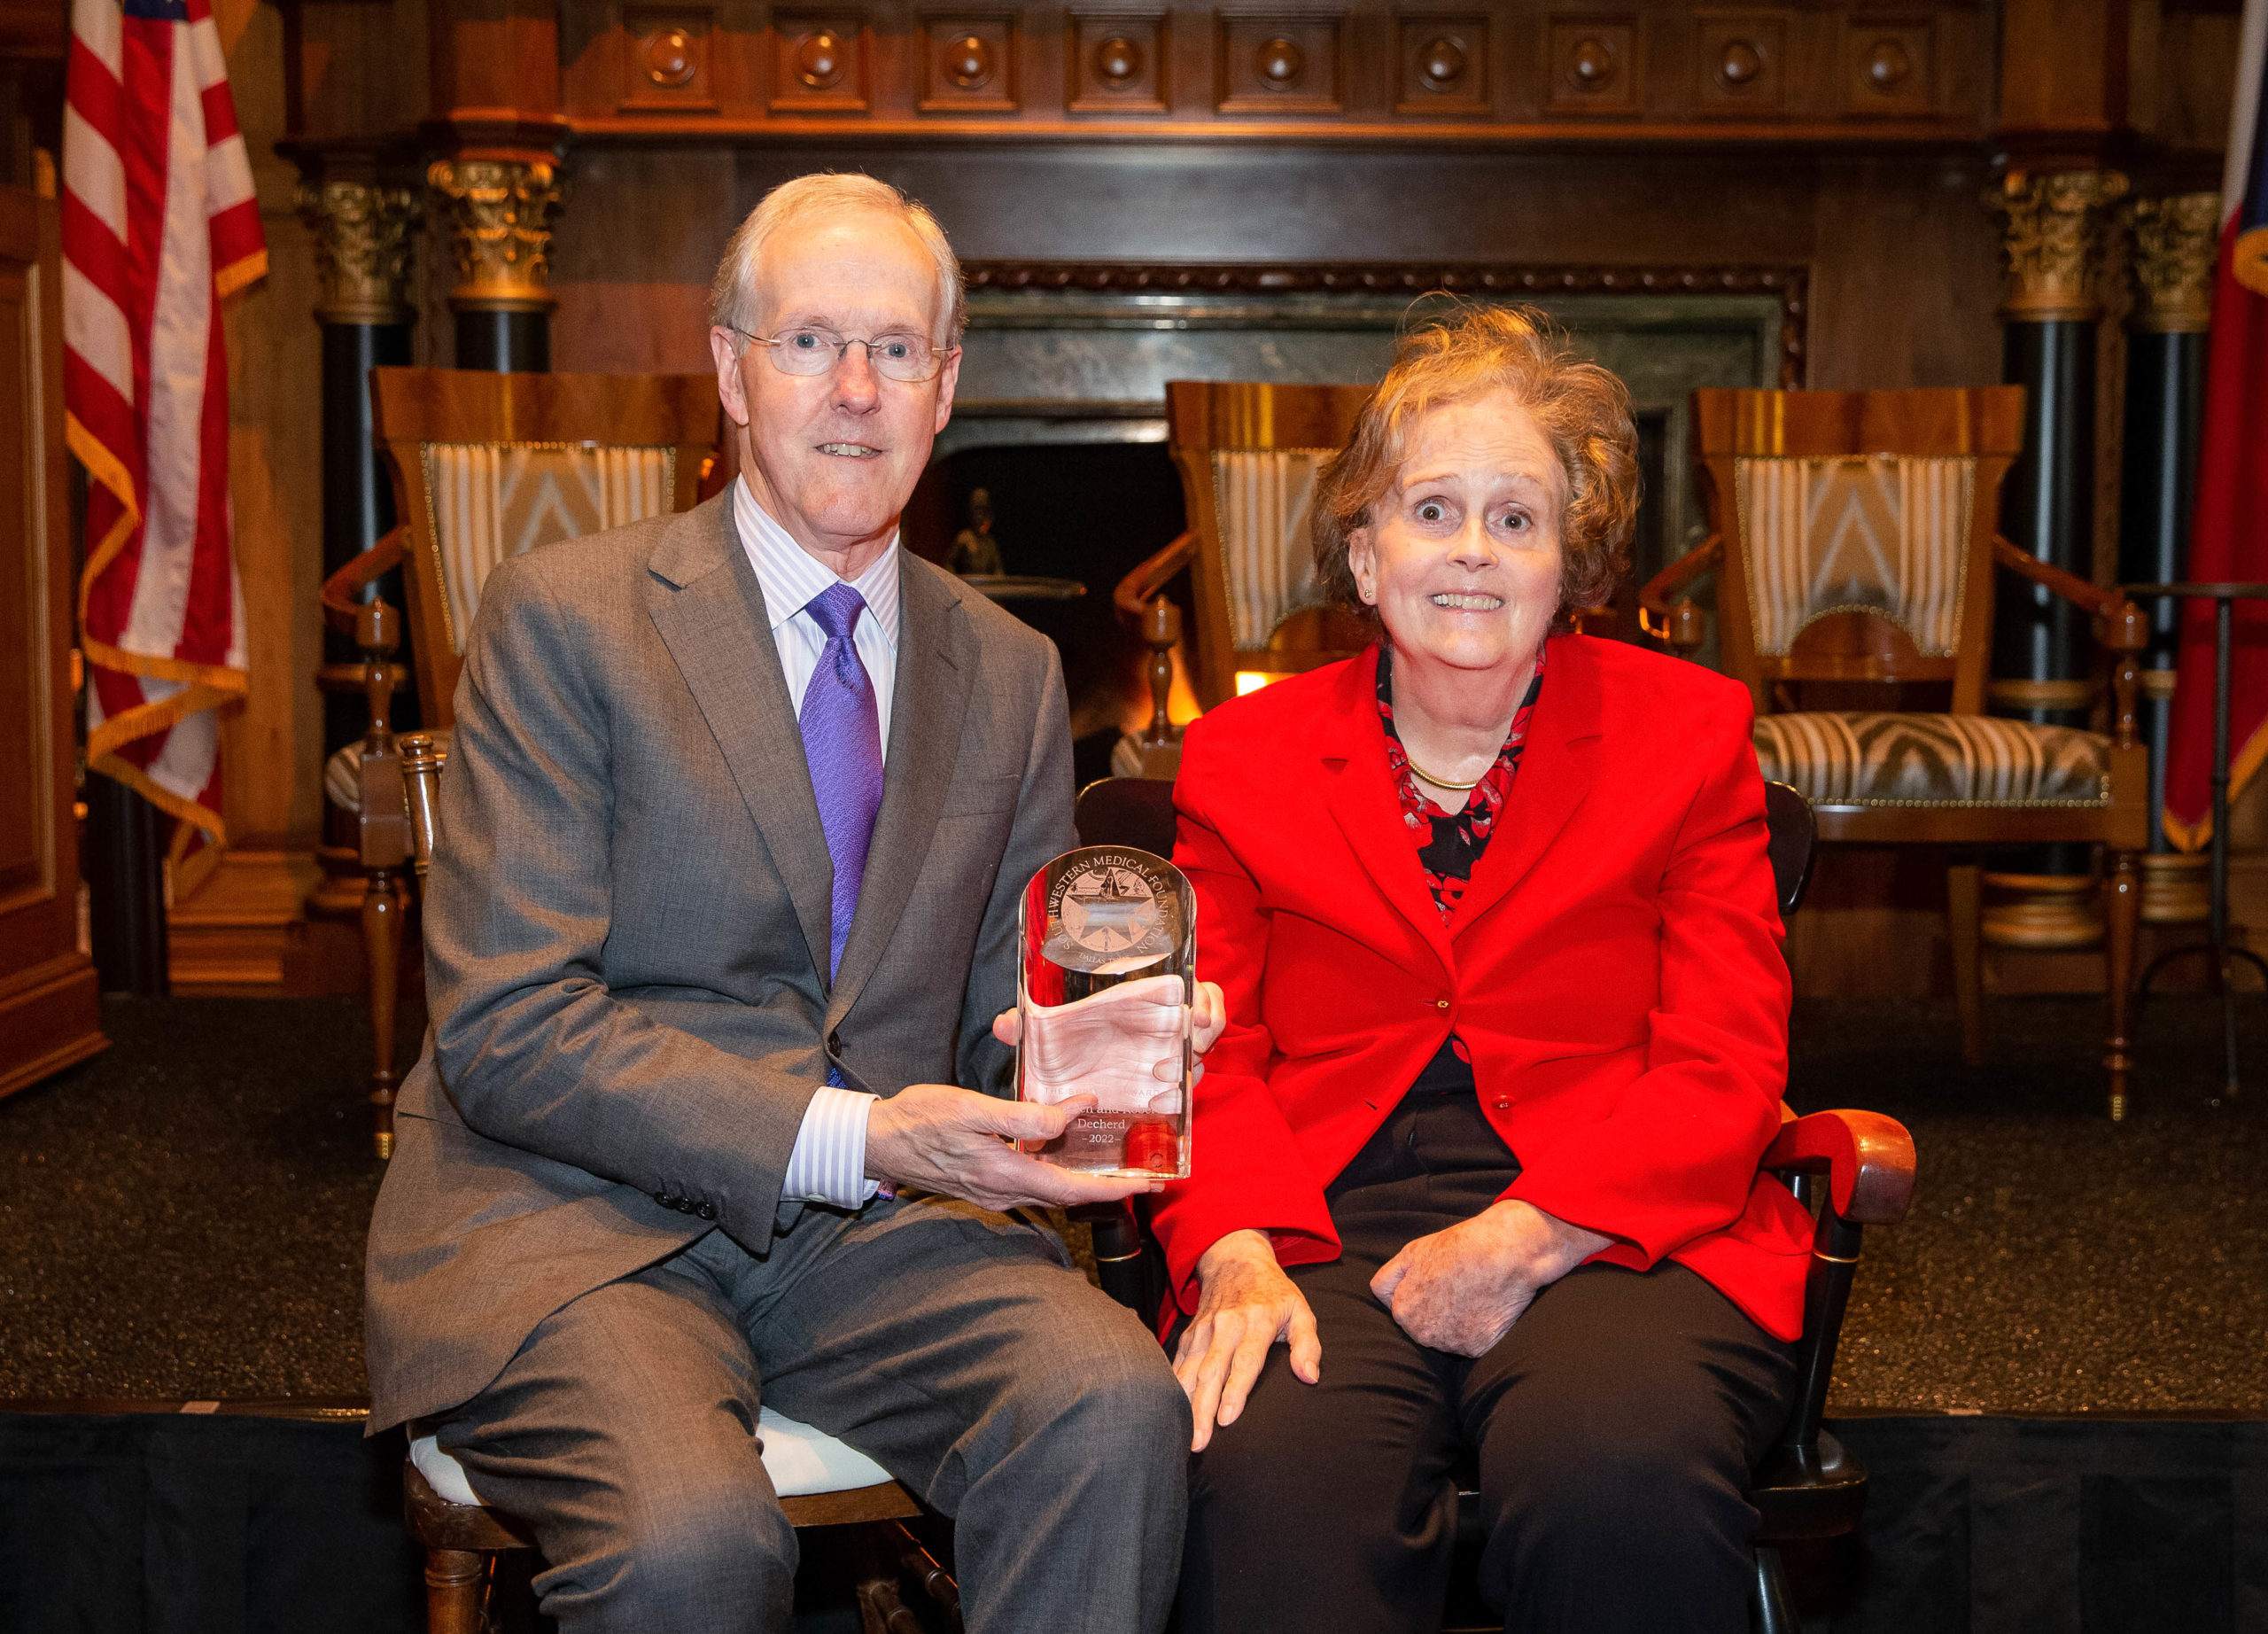 Robert and Maureen Decherd holding their Sprague award at the awards ceremony.